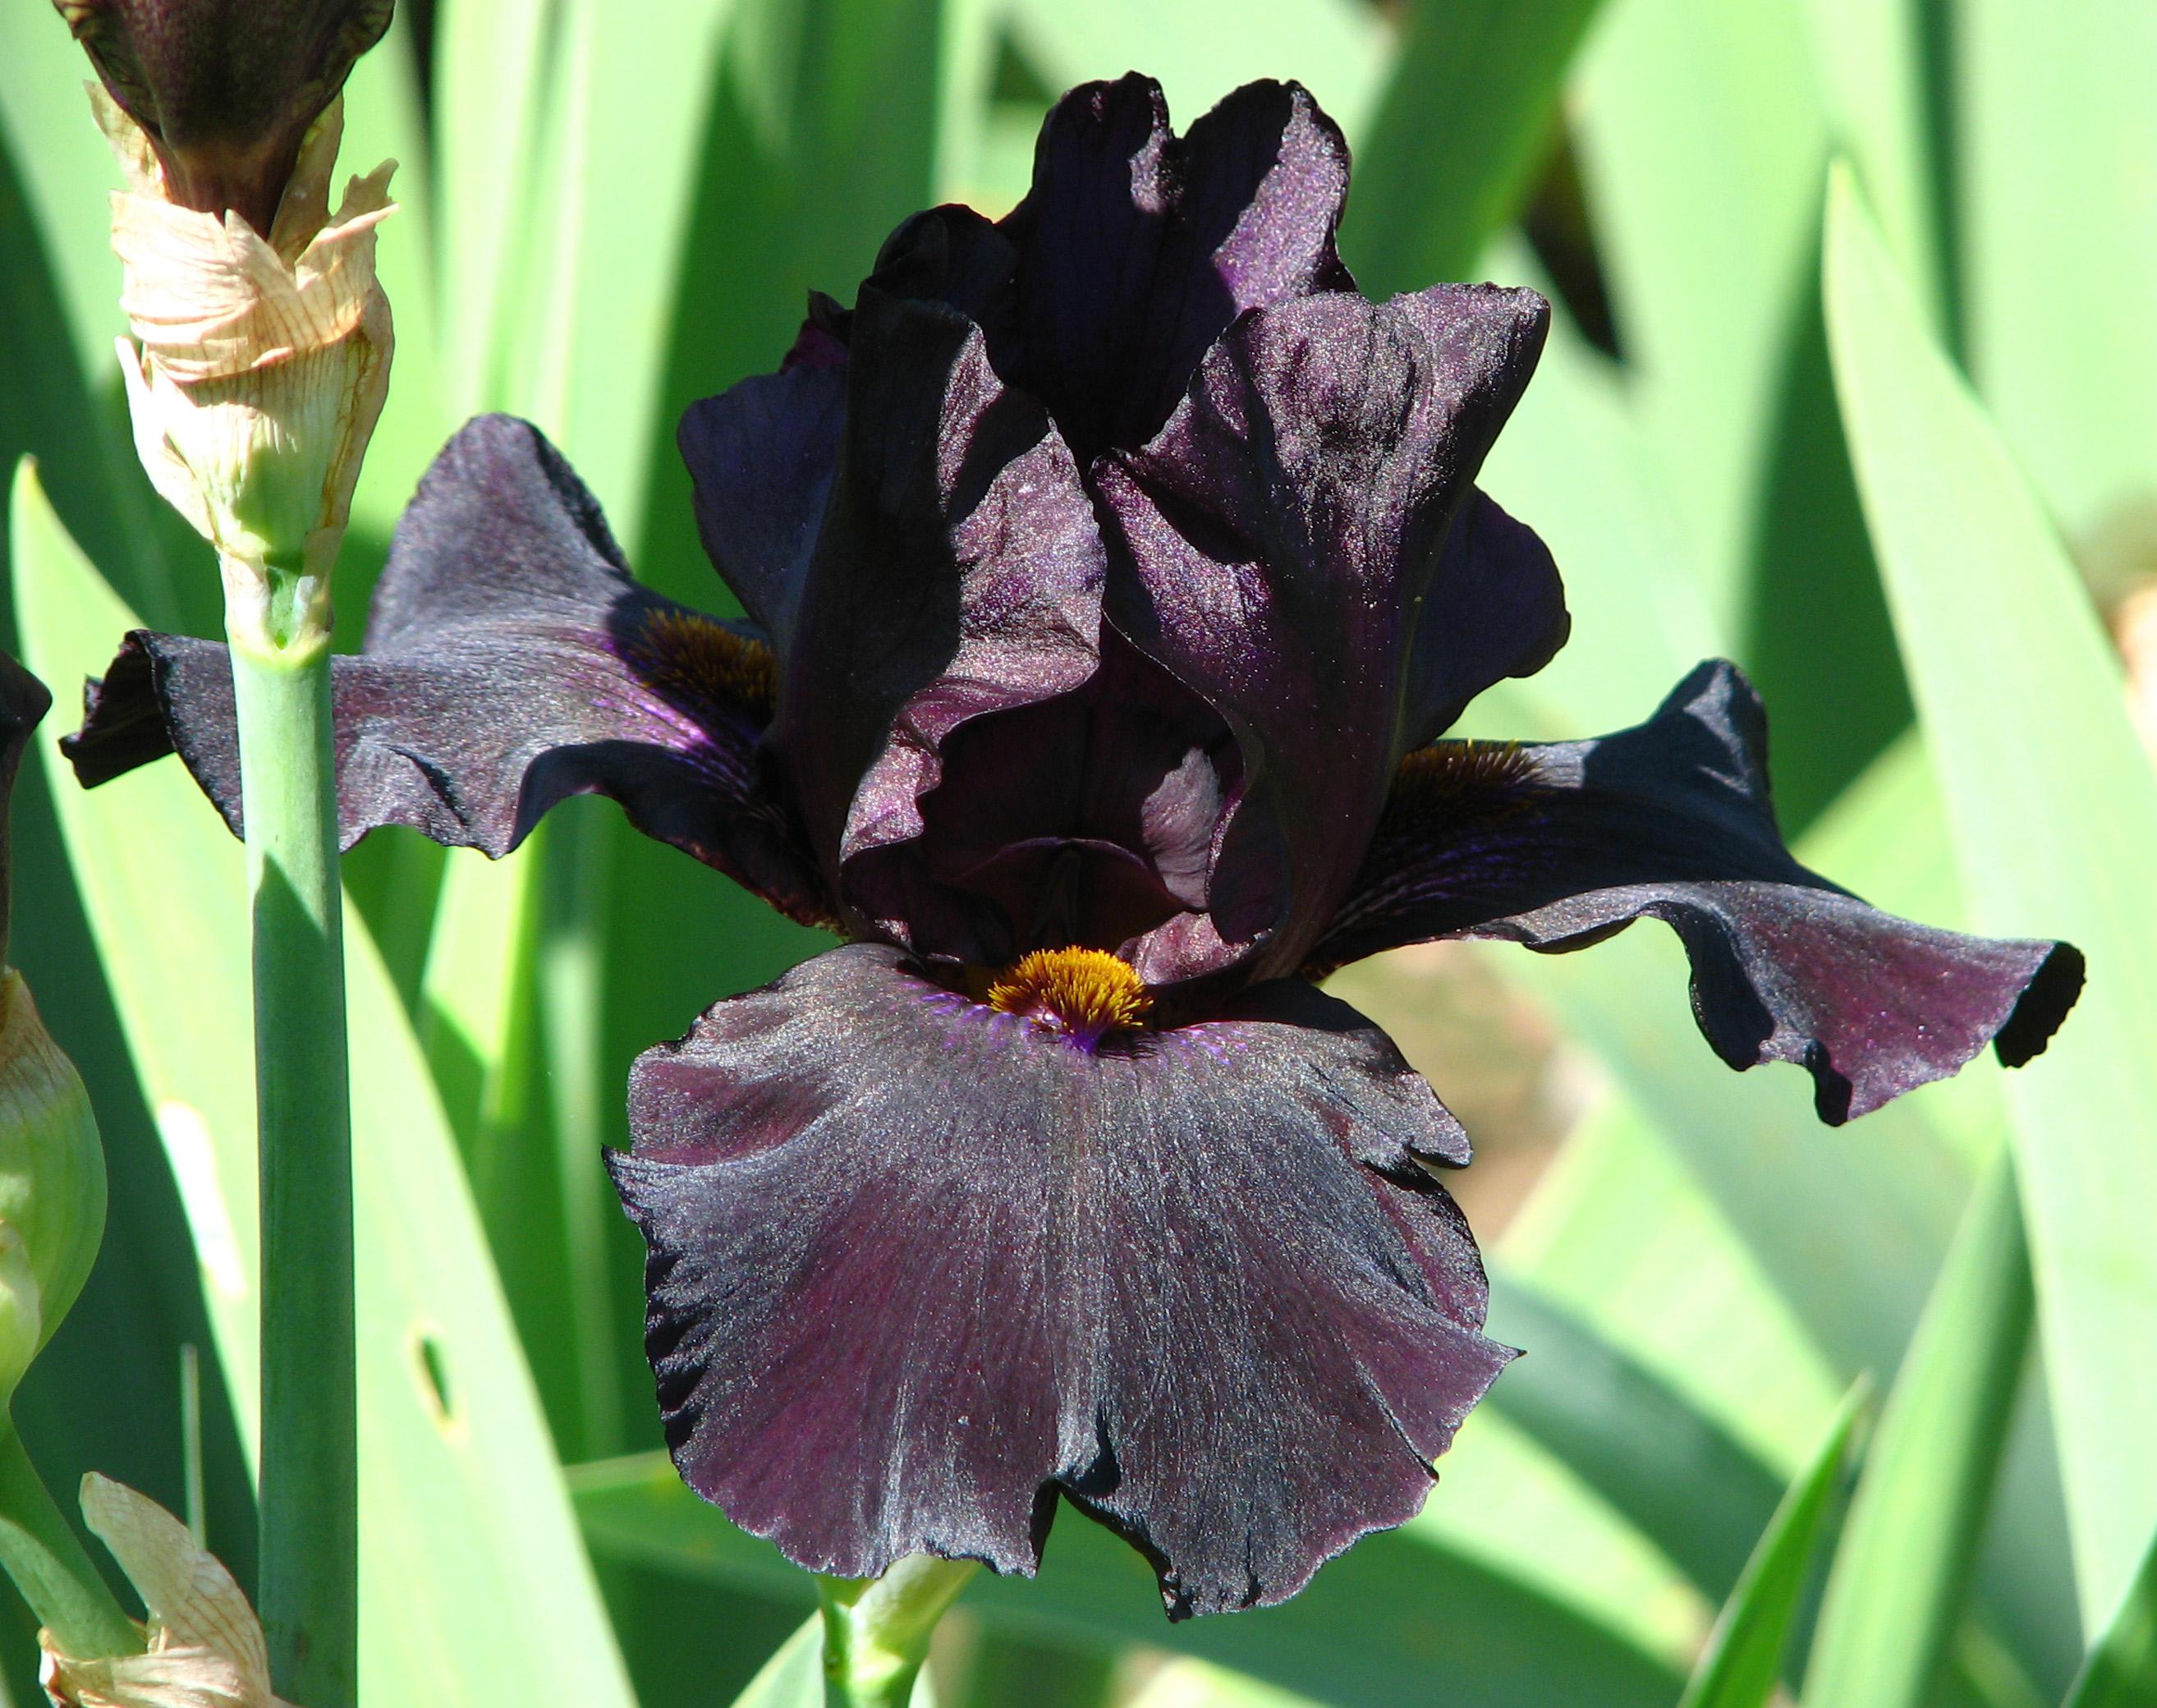 Iris Germanica 'Black Lipstick' - Tall Bearded Iris from Leo Berbee Bulb Company